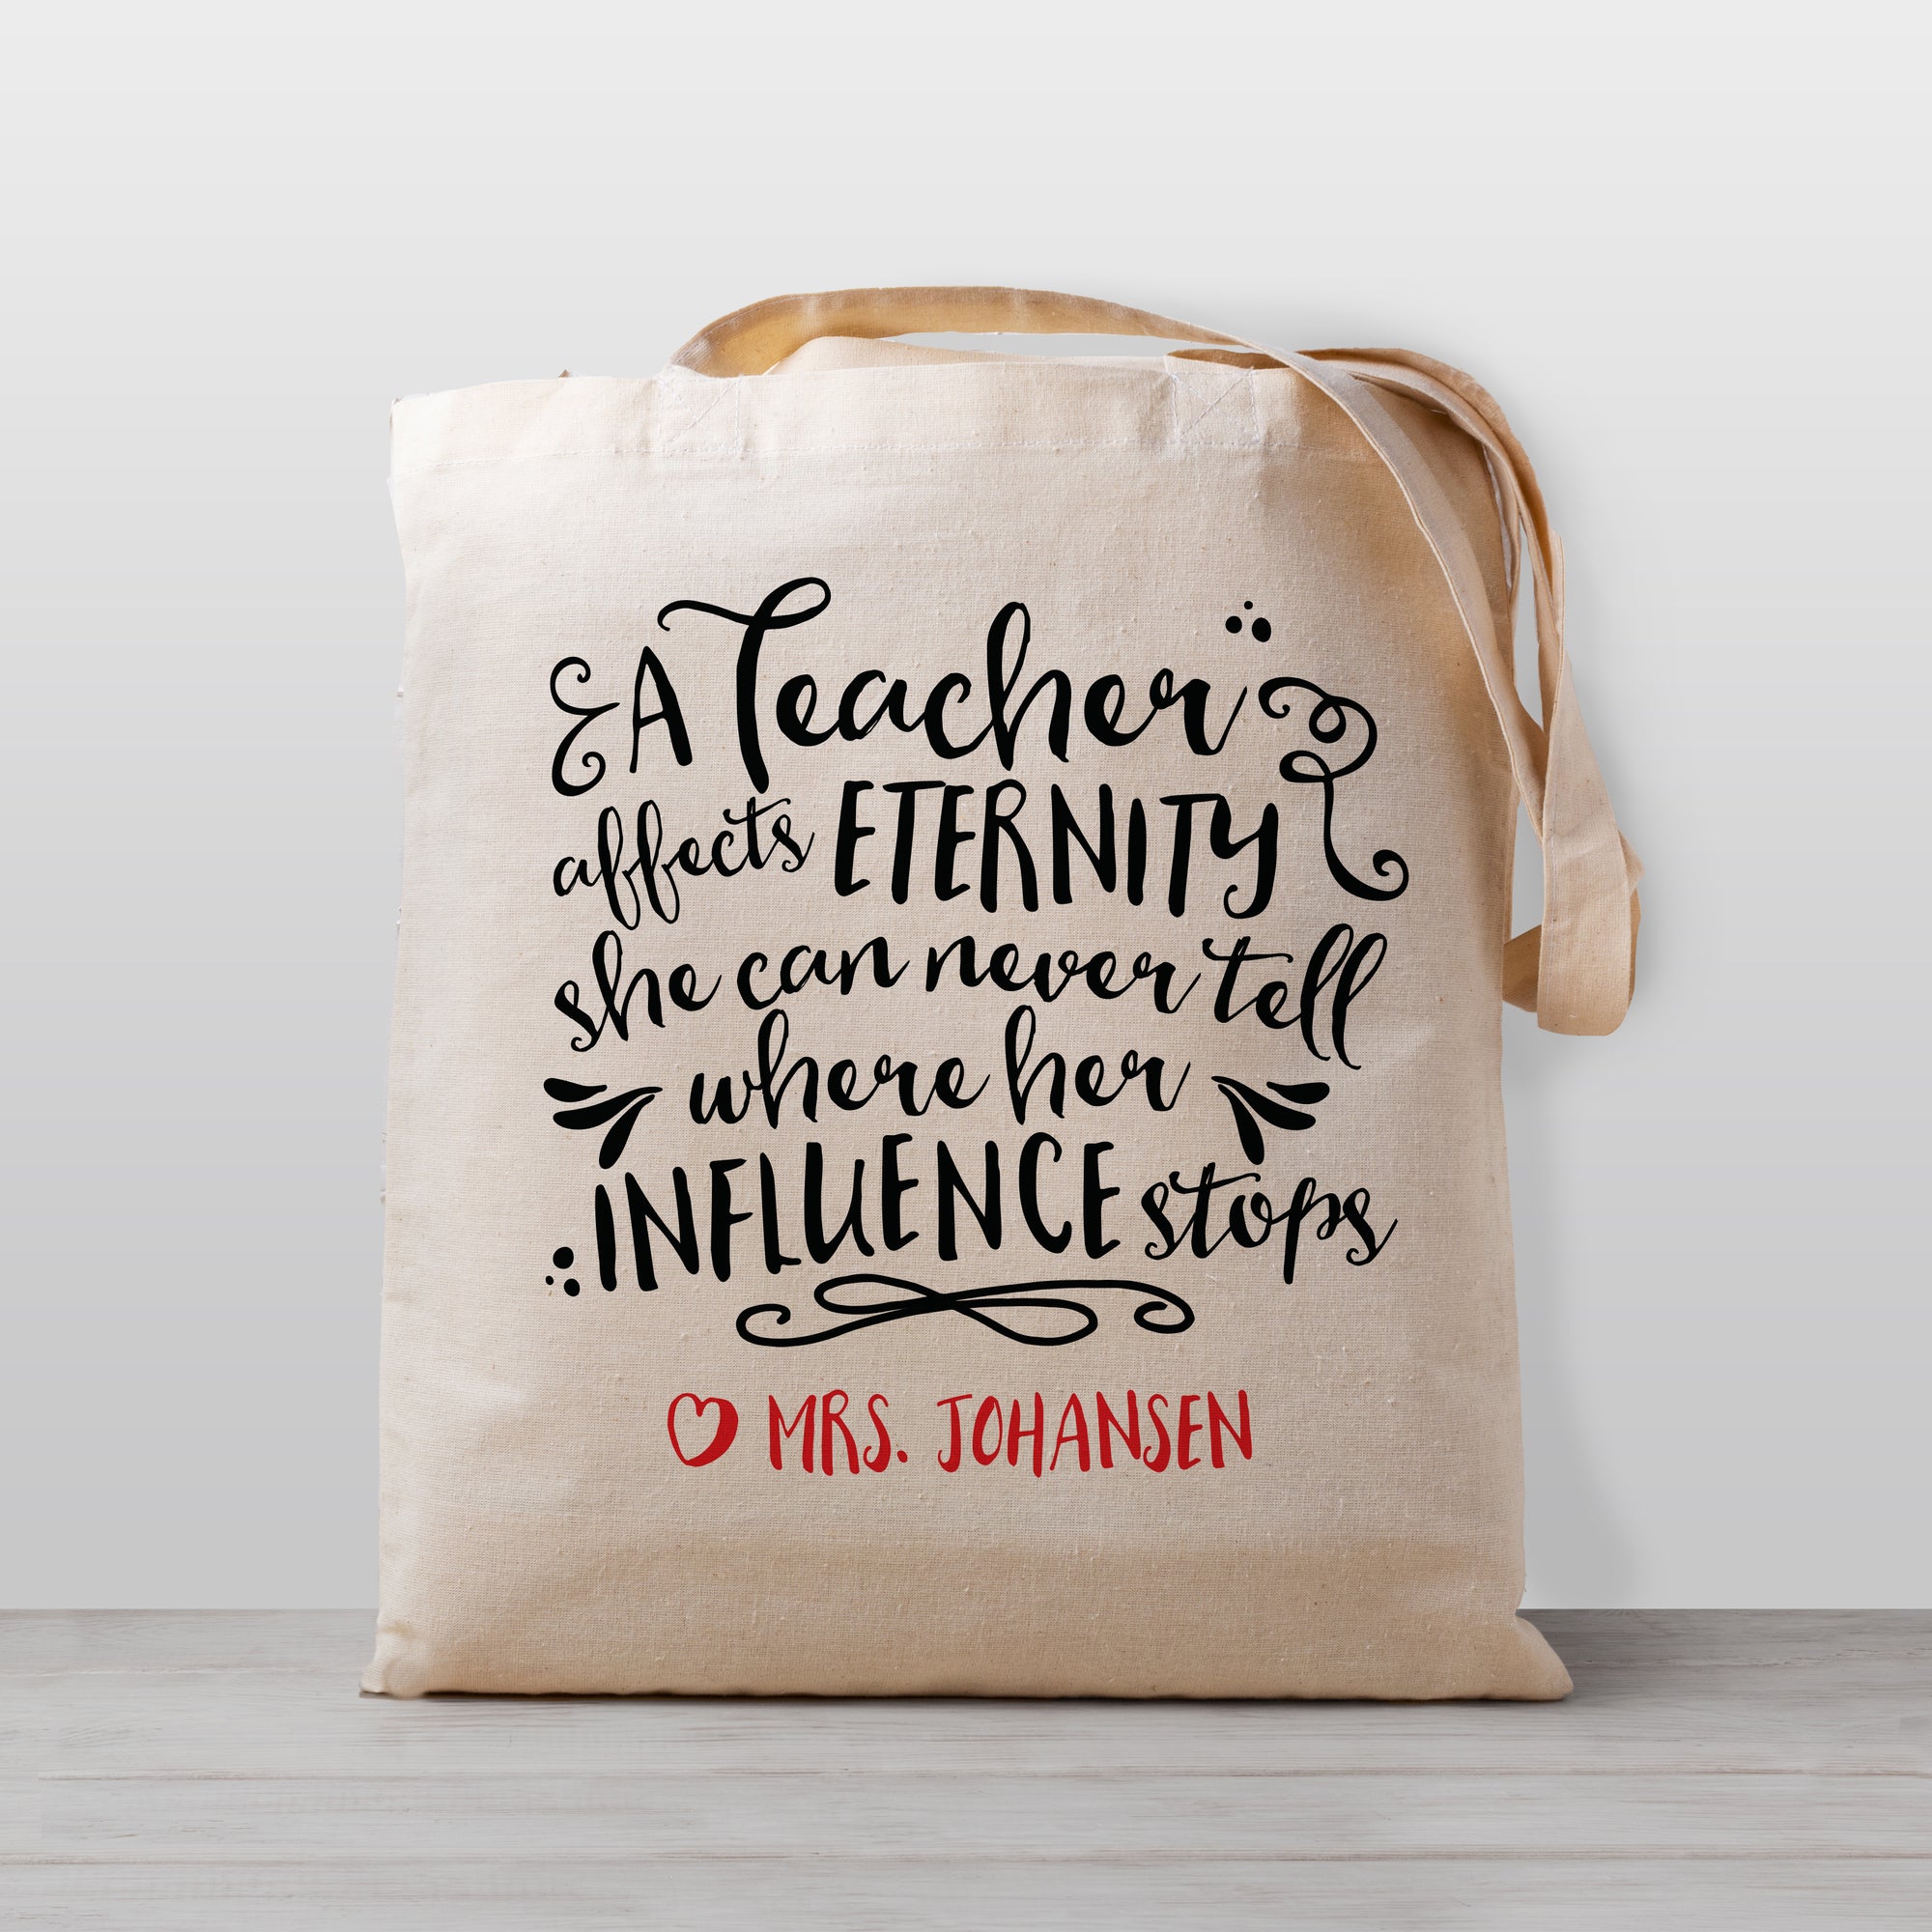 Personalized Teacher Tote Bag, 100% Natural Cotton Canvas, A Teacher affects Eternity